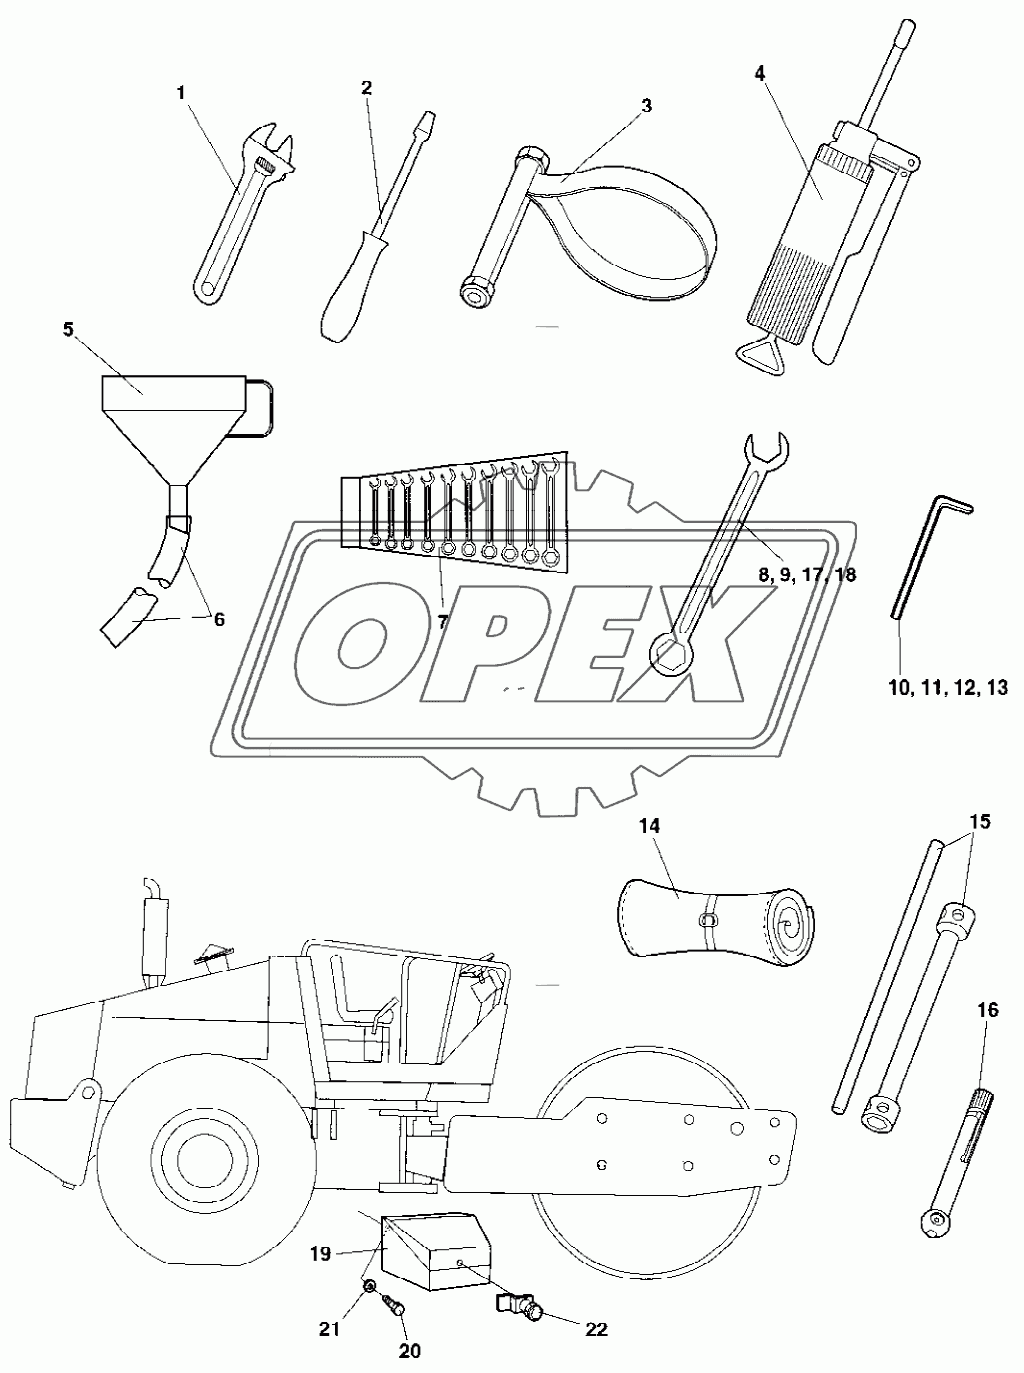 Tool equipment